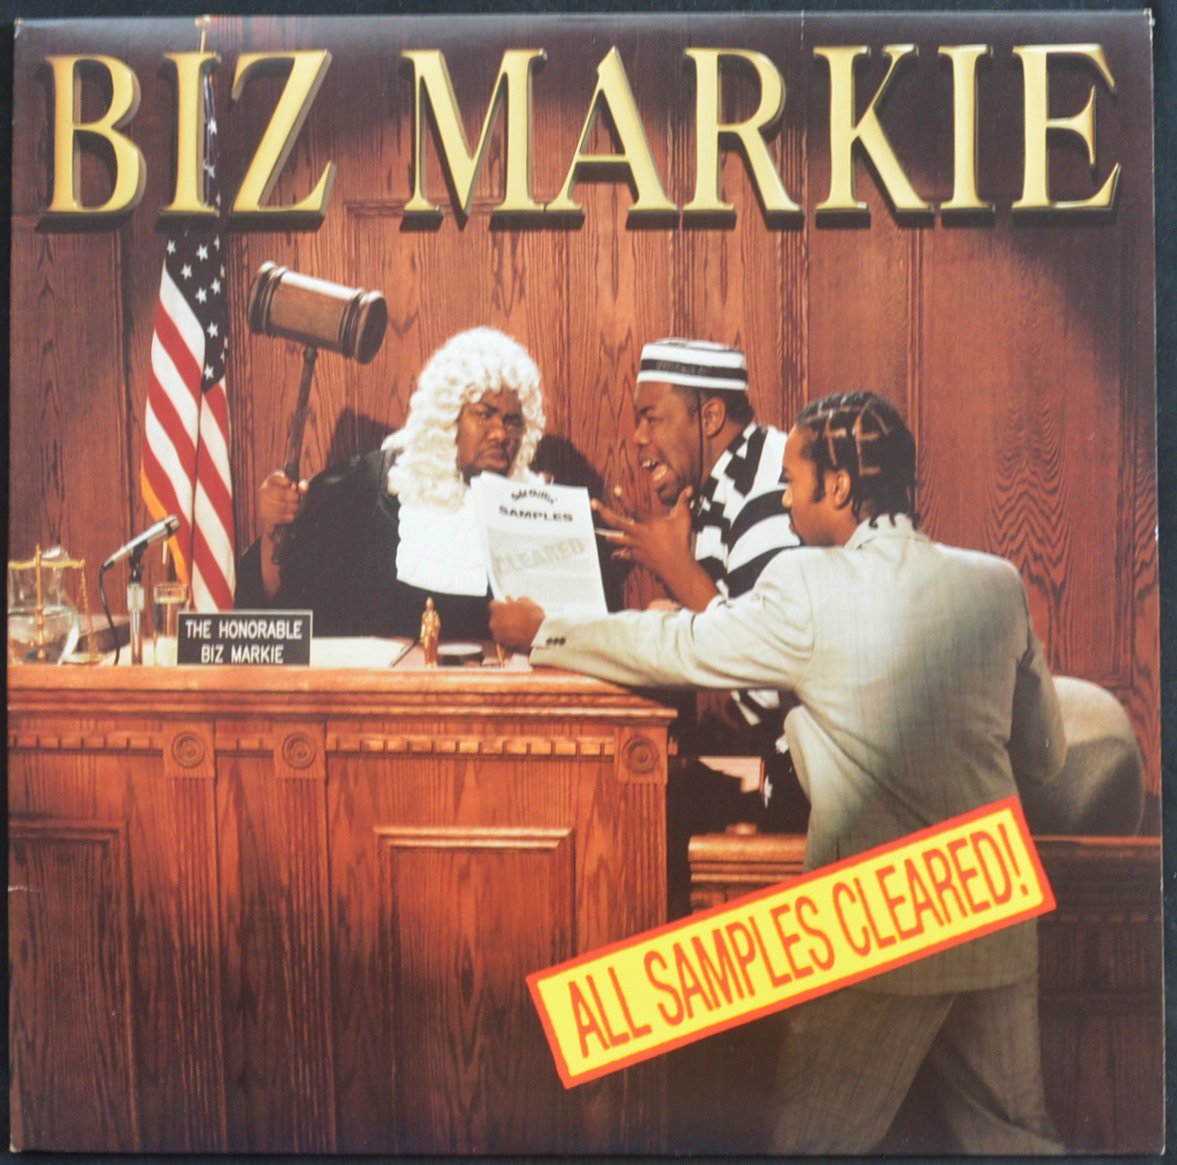 Biz Markie - All Samples Cleared!